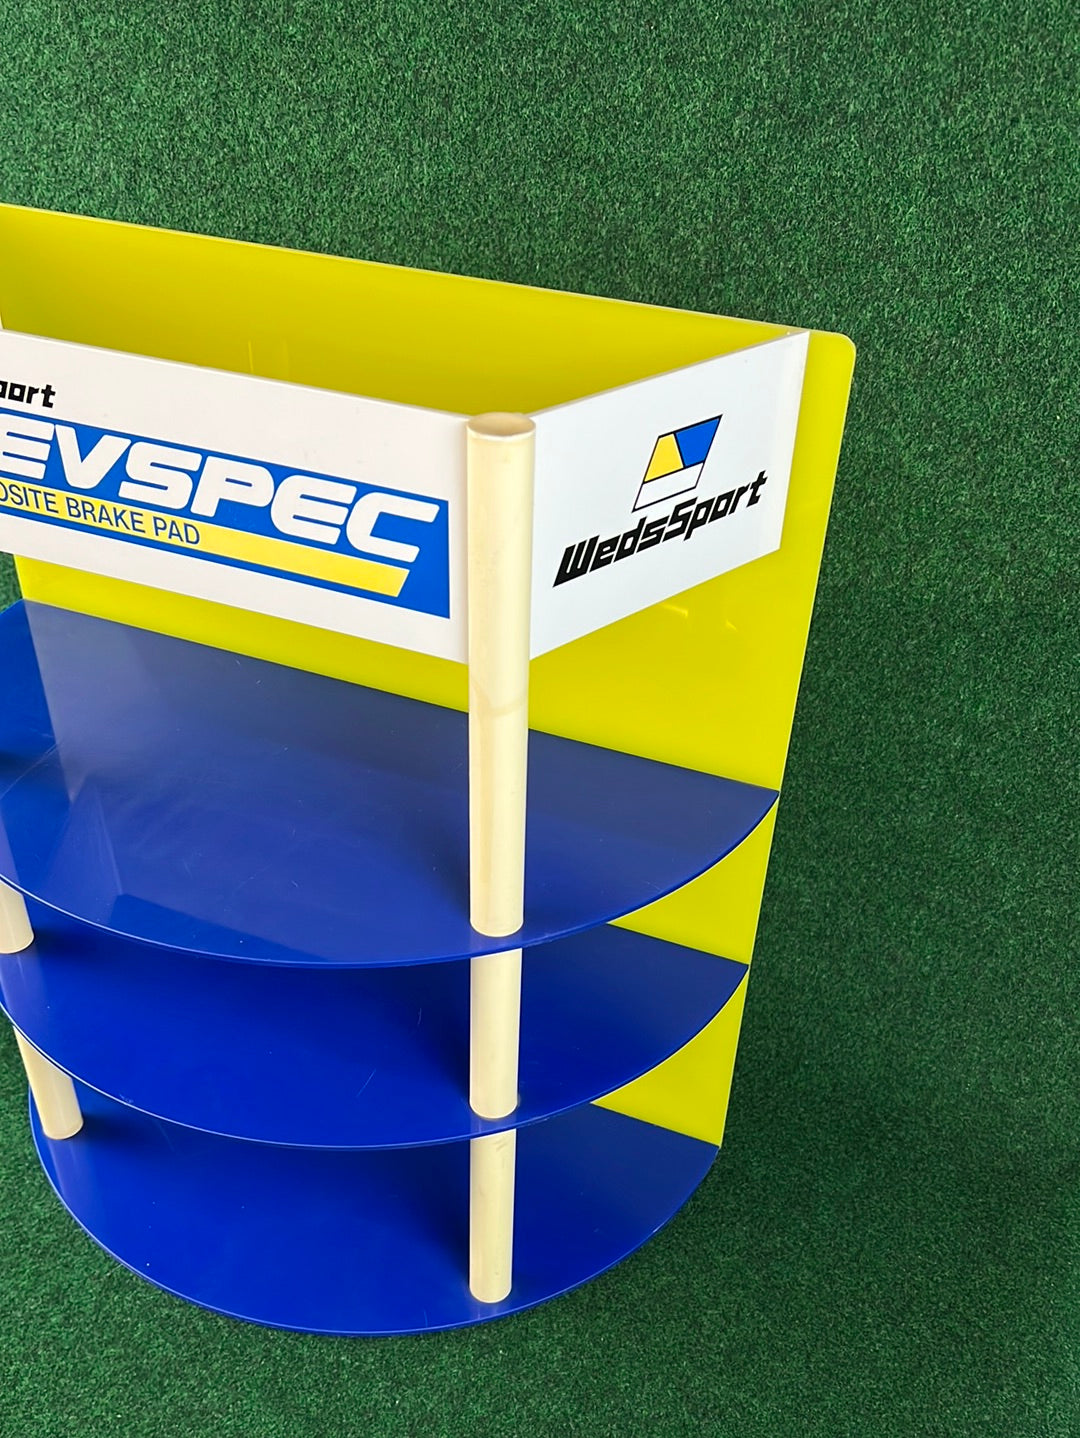 WedsSport - Revspec Japanese Storefront Retail Display Stand Shelf